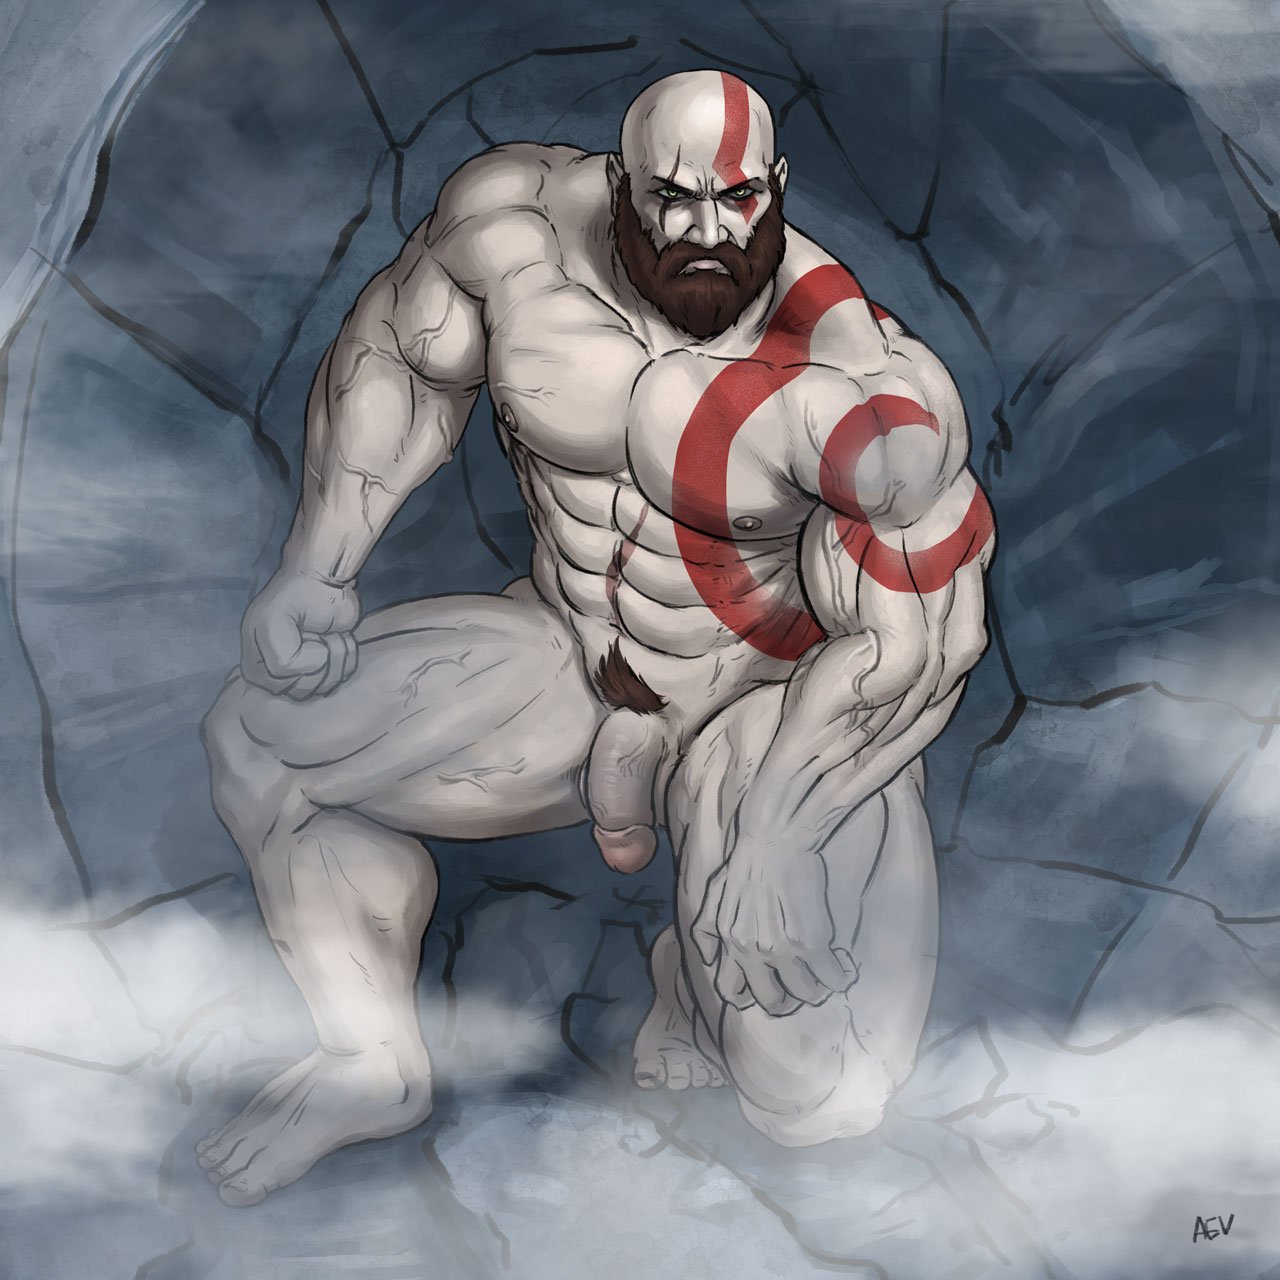 Kratos/God of War thread.